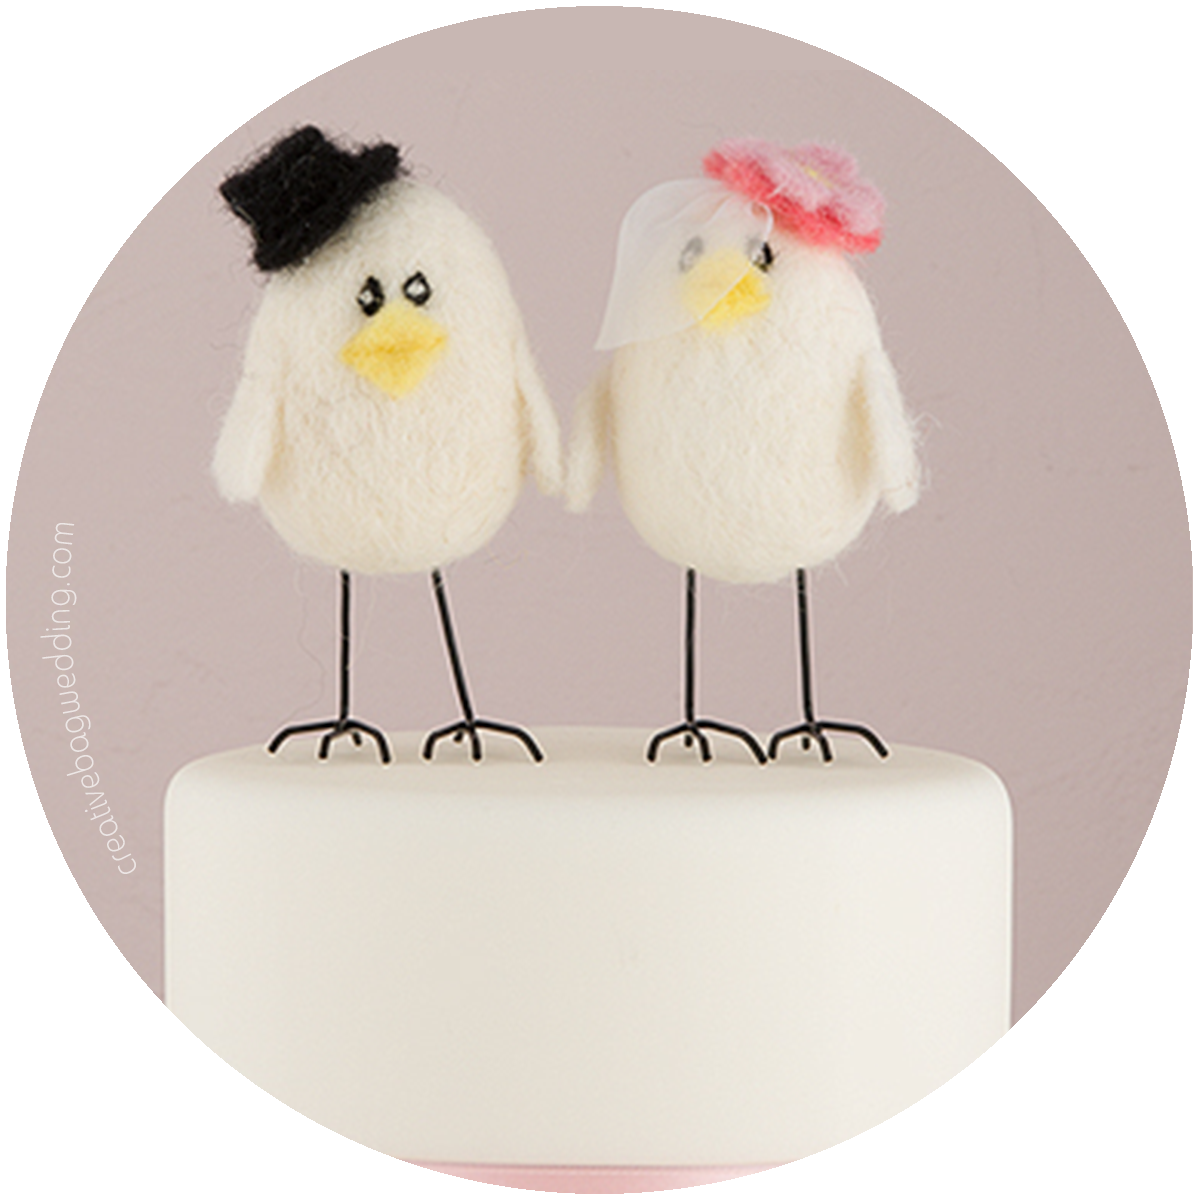 custom cake toppers from Creative Bag Wedding | Creative Bag